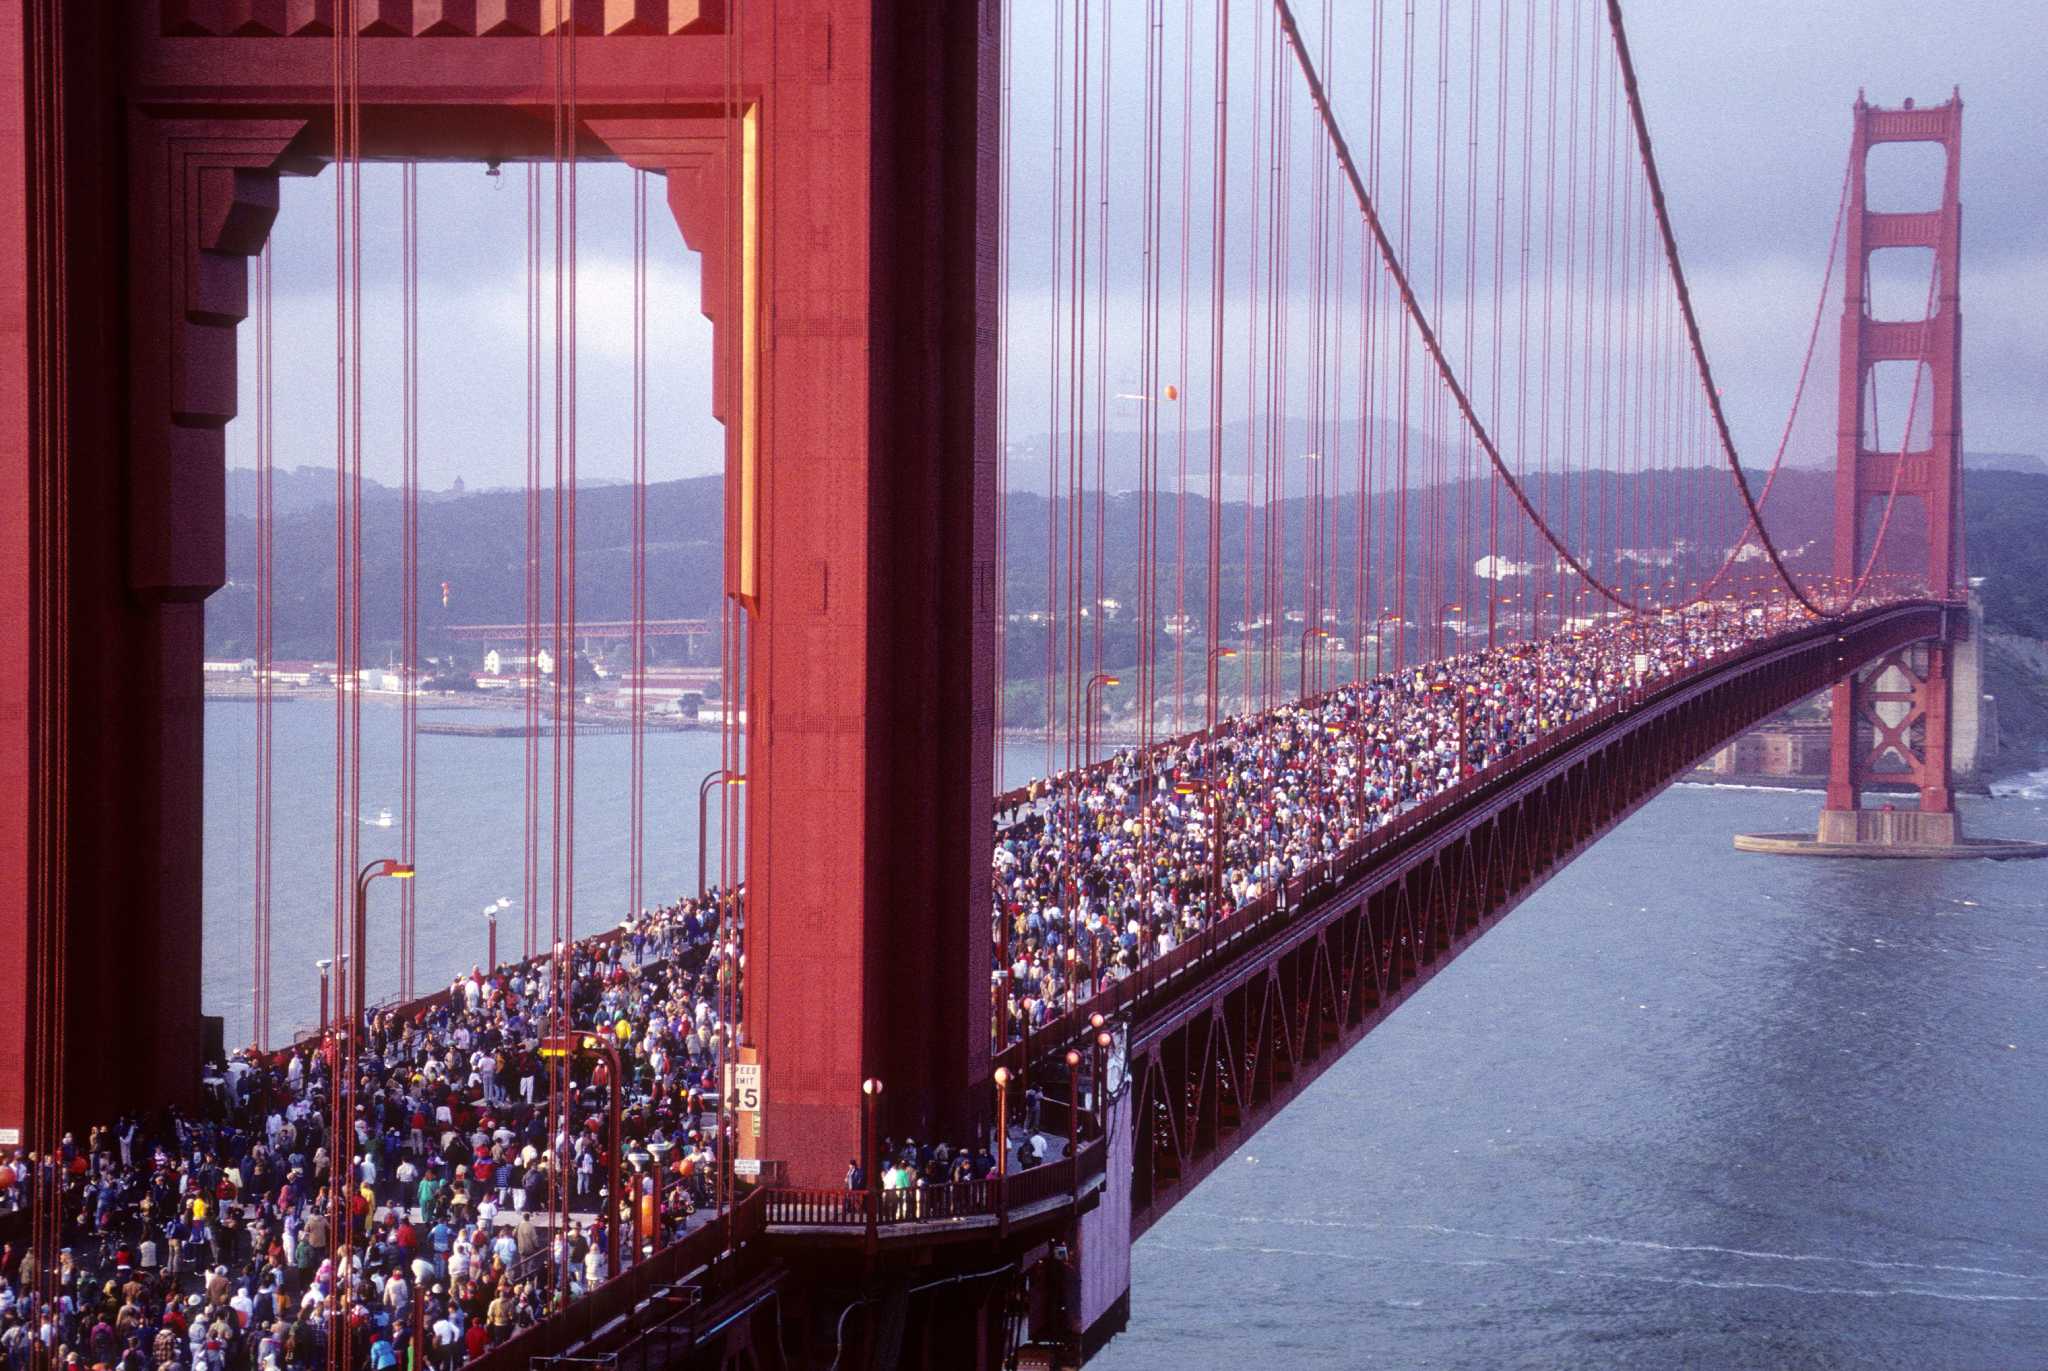 32 years ago, 300,000 people flattened the Golden Gate Bridge